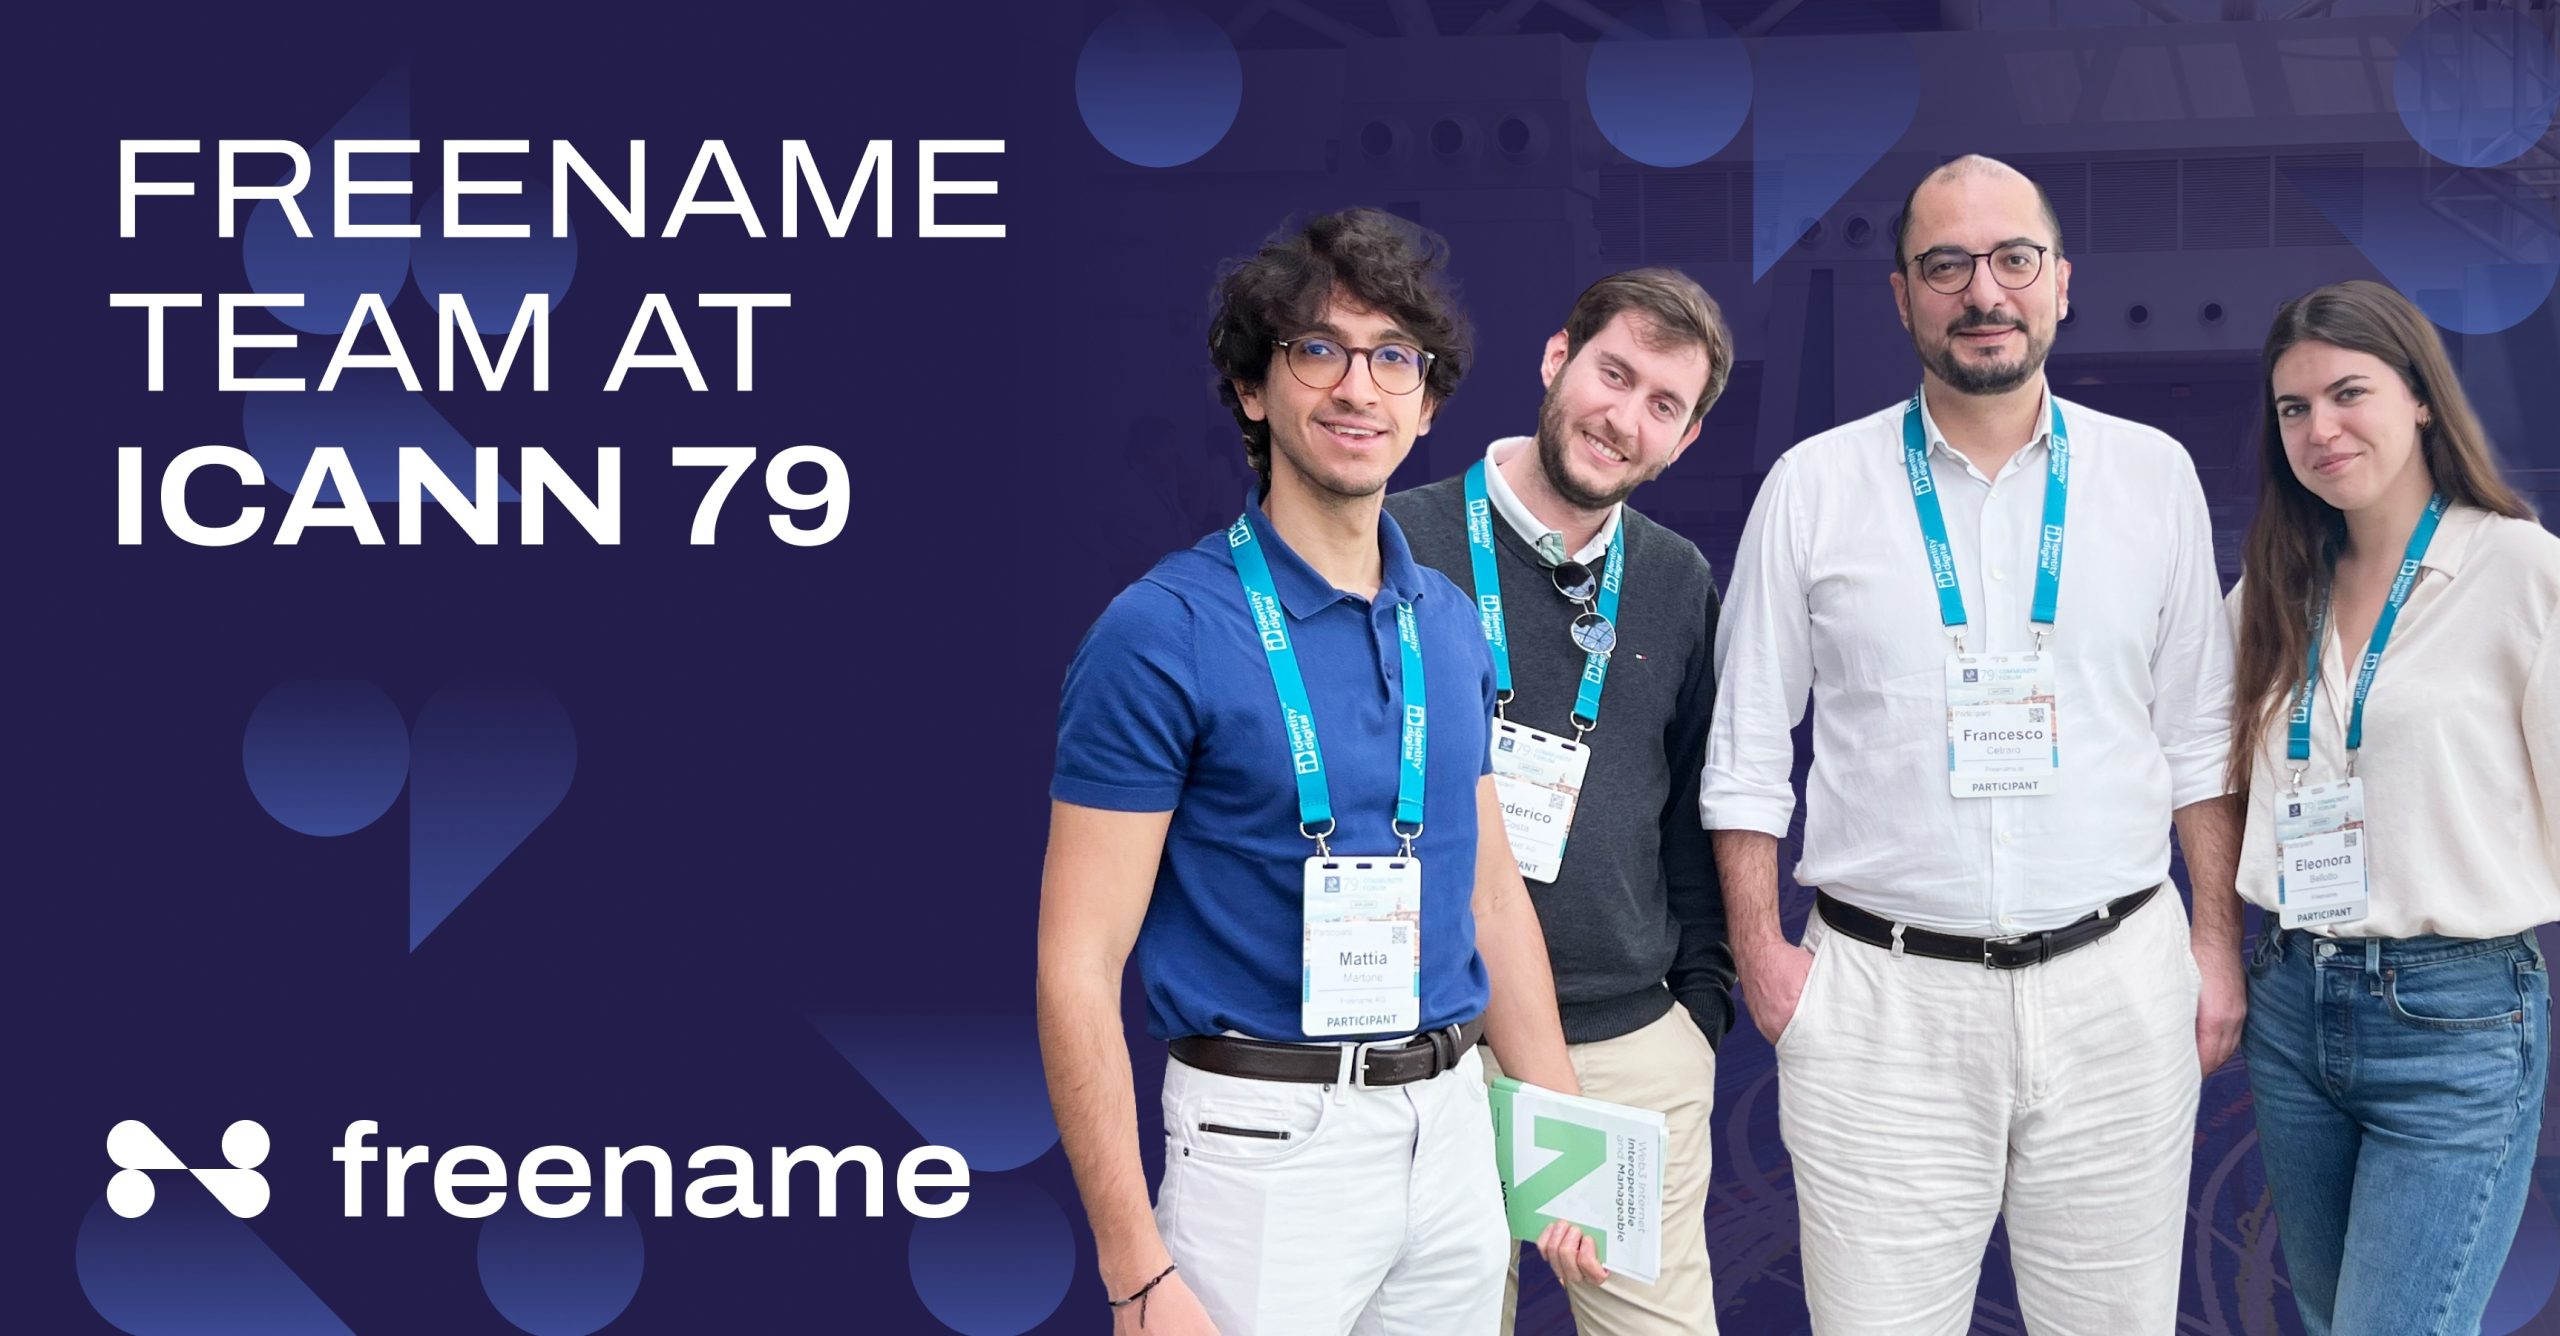 Freename Team at ICANN 79